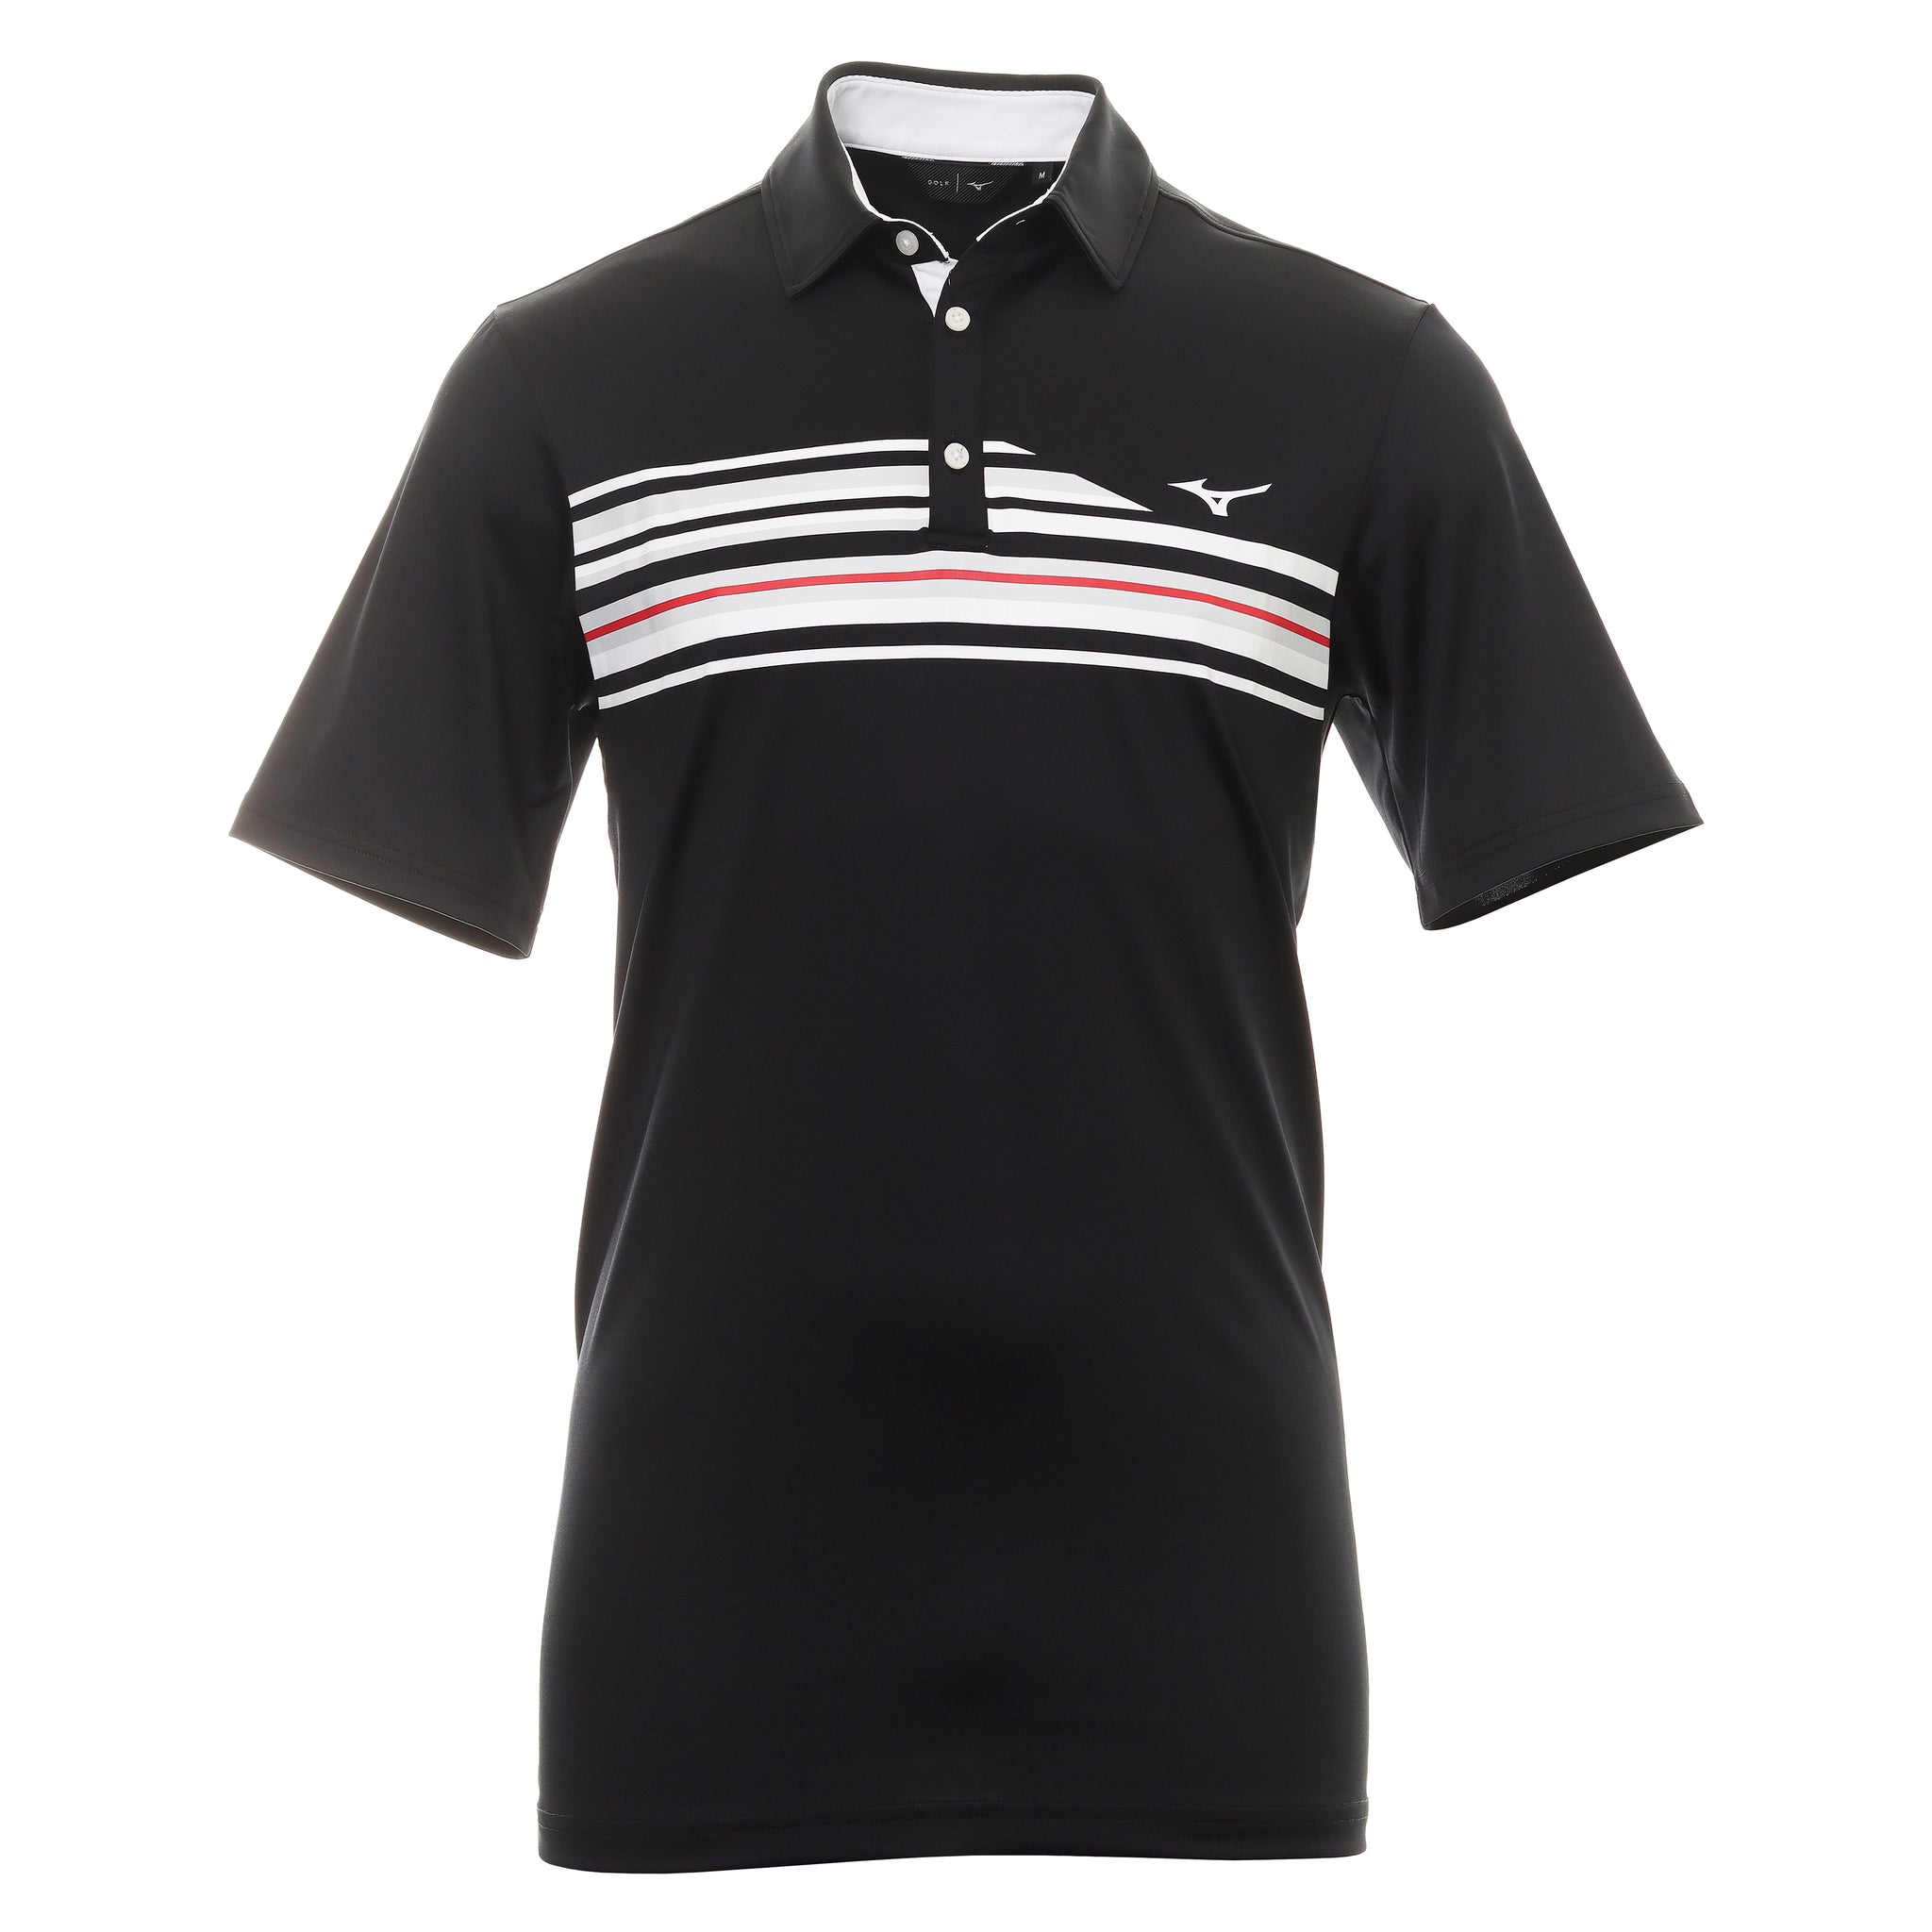 mizuno-golf-quick-dry-elite-stripe-shirt-52ga2007-black-09